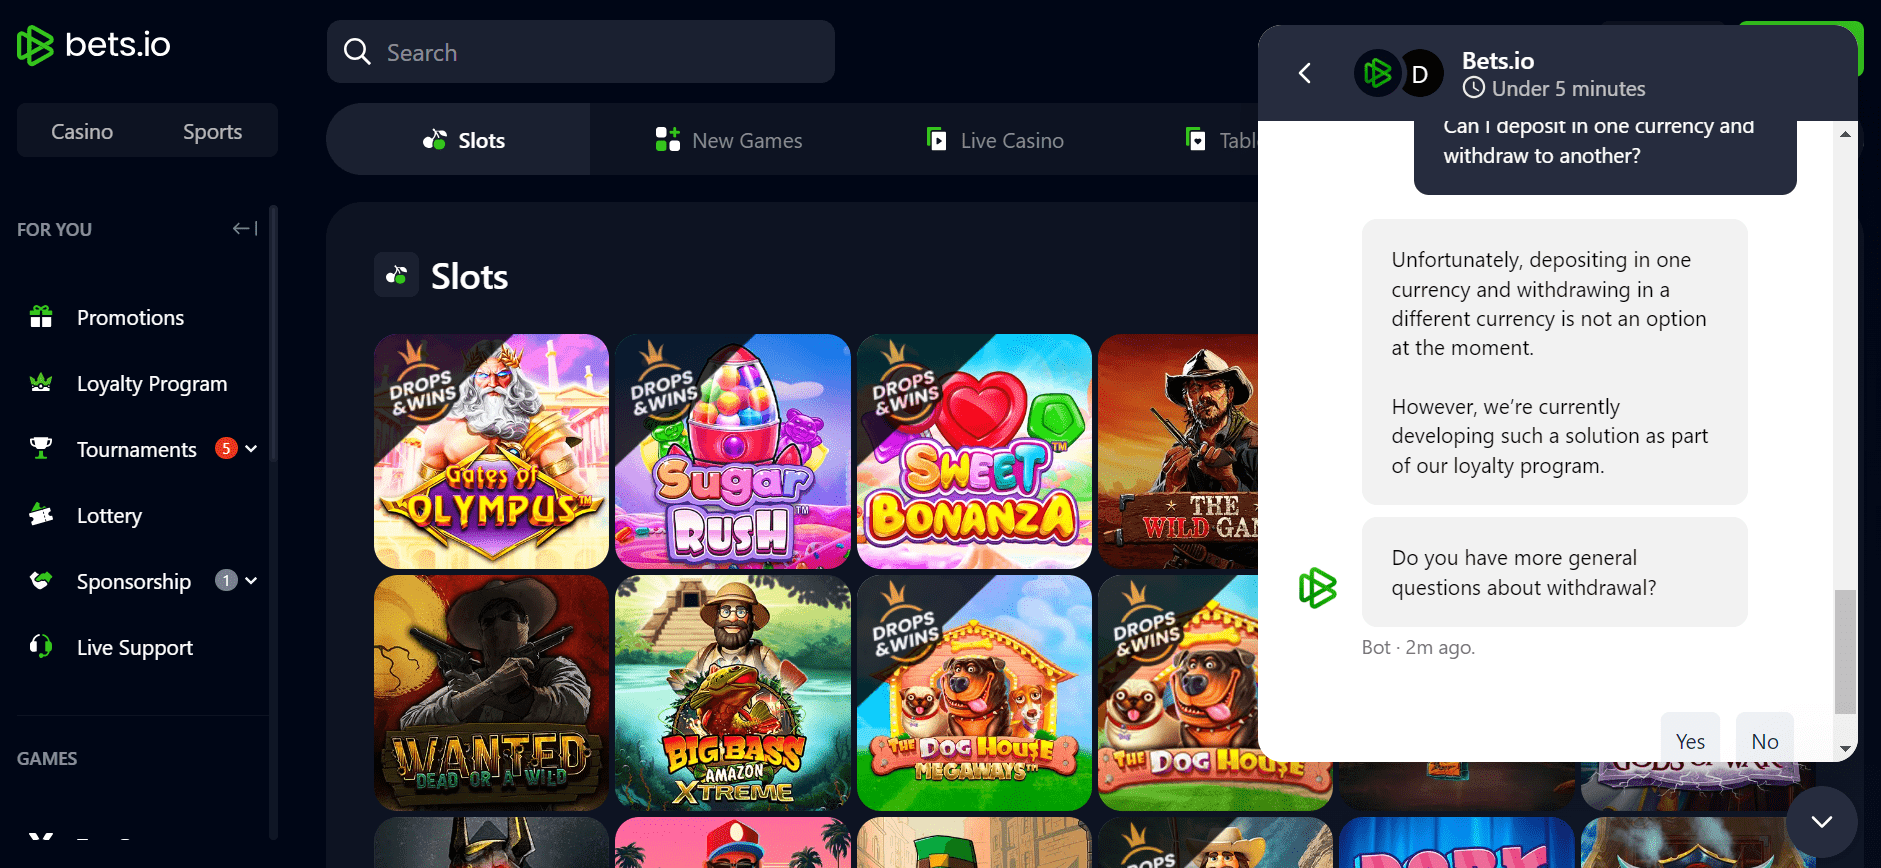 bets.io casino review customer support screenshot